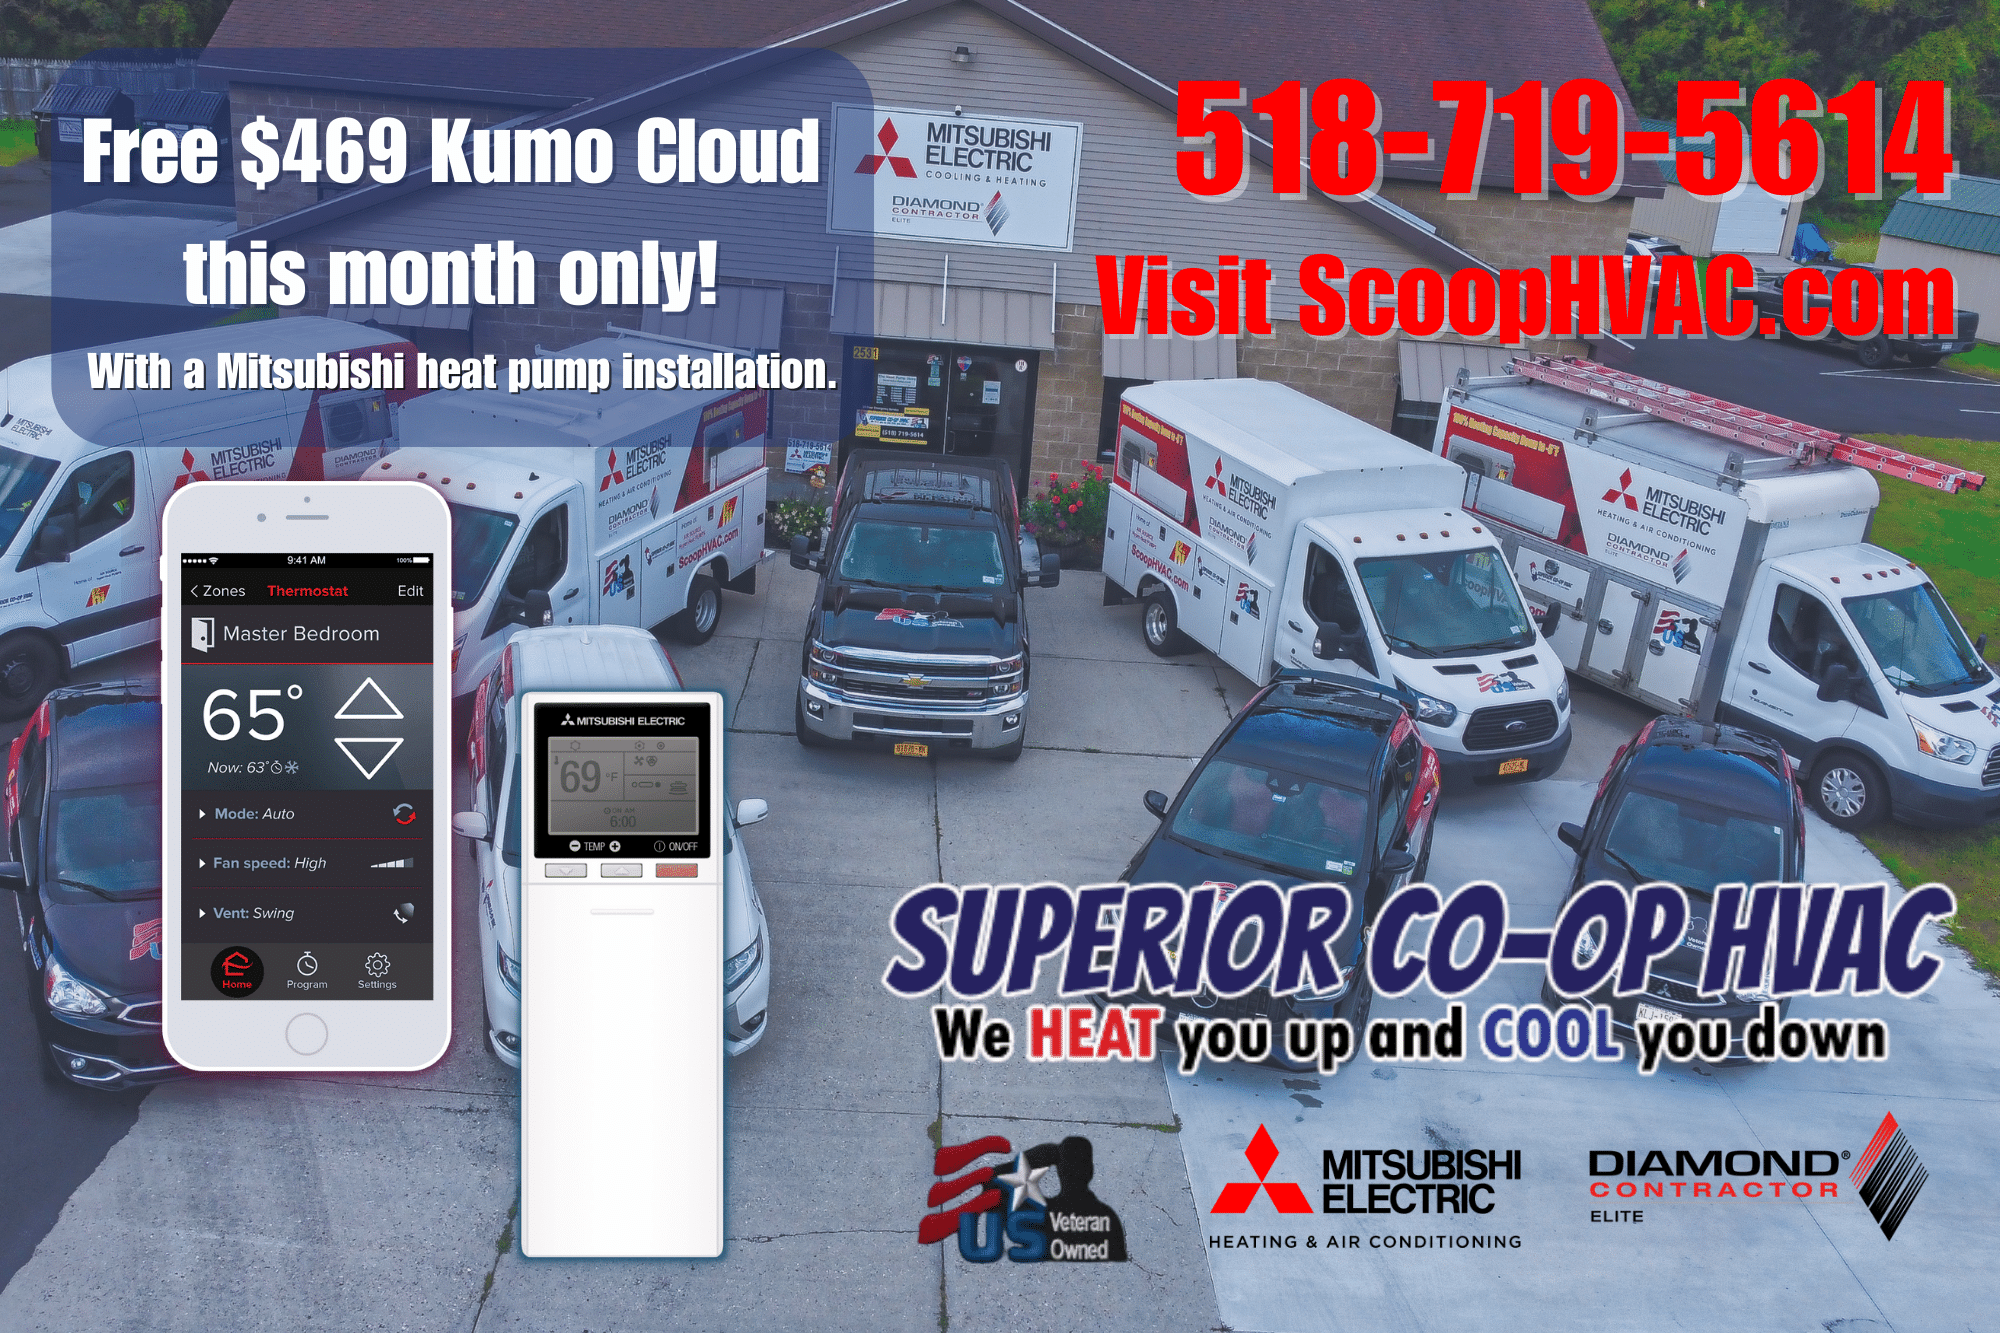 Free Kumo Cloud with Mitsubishi heat pump system installation